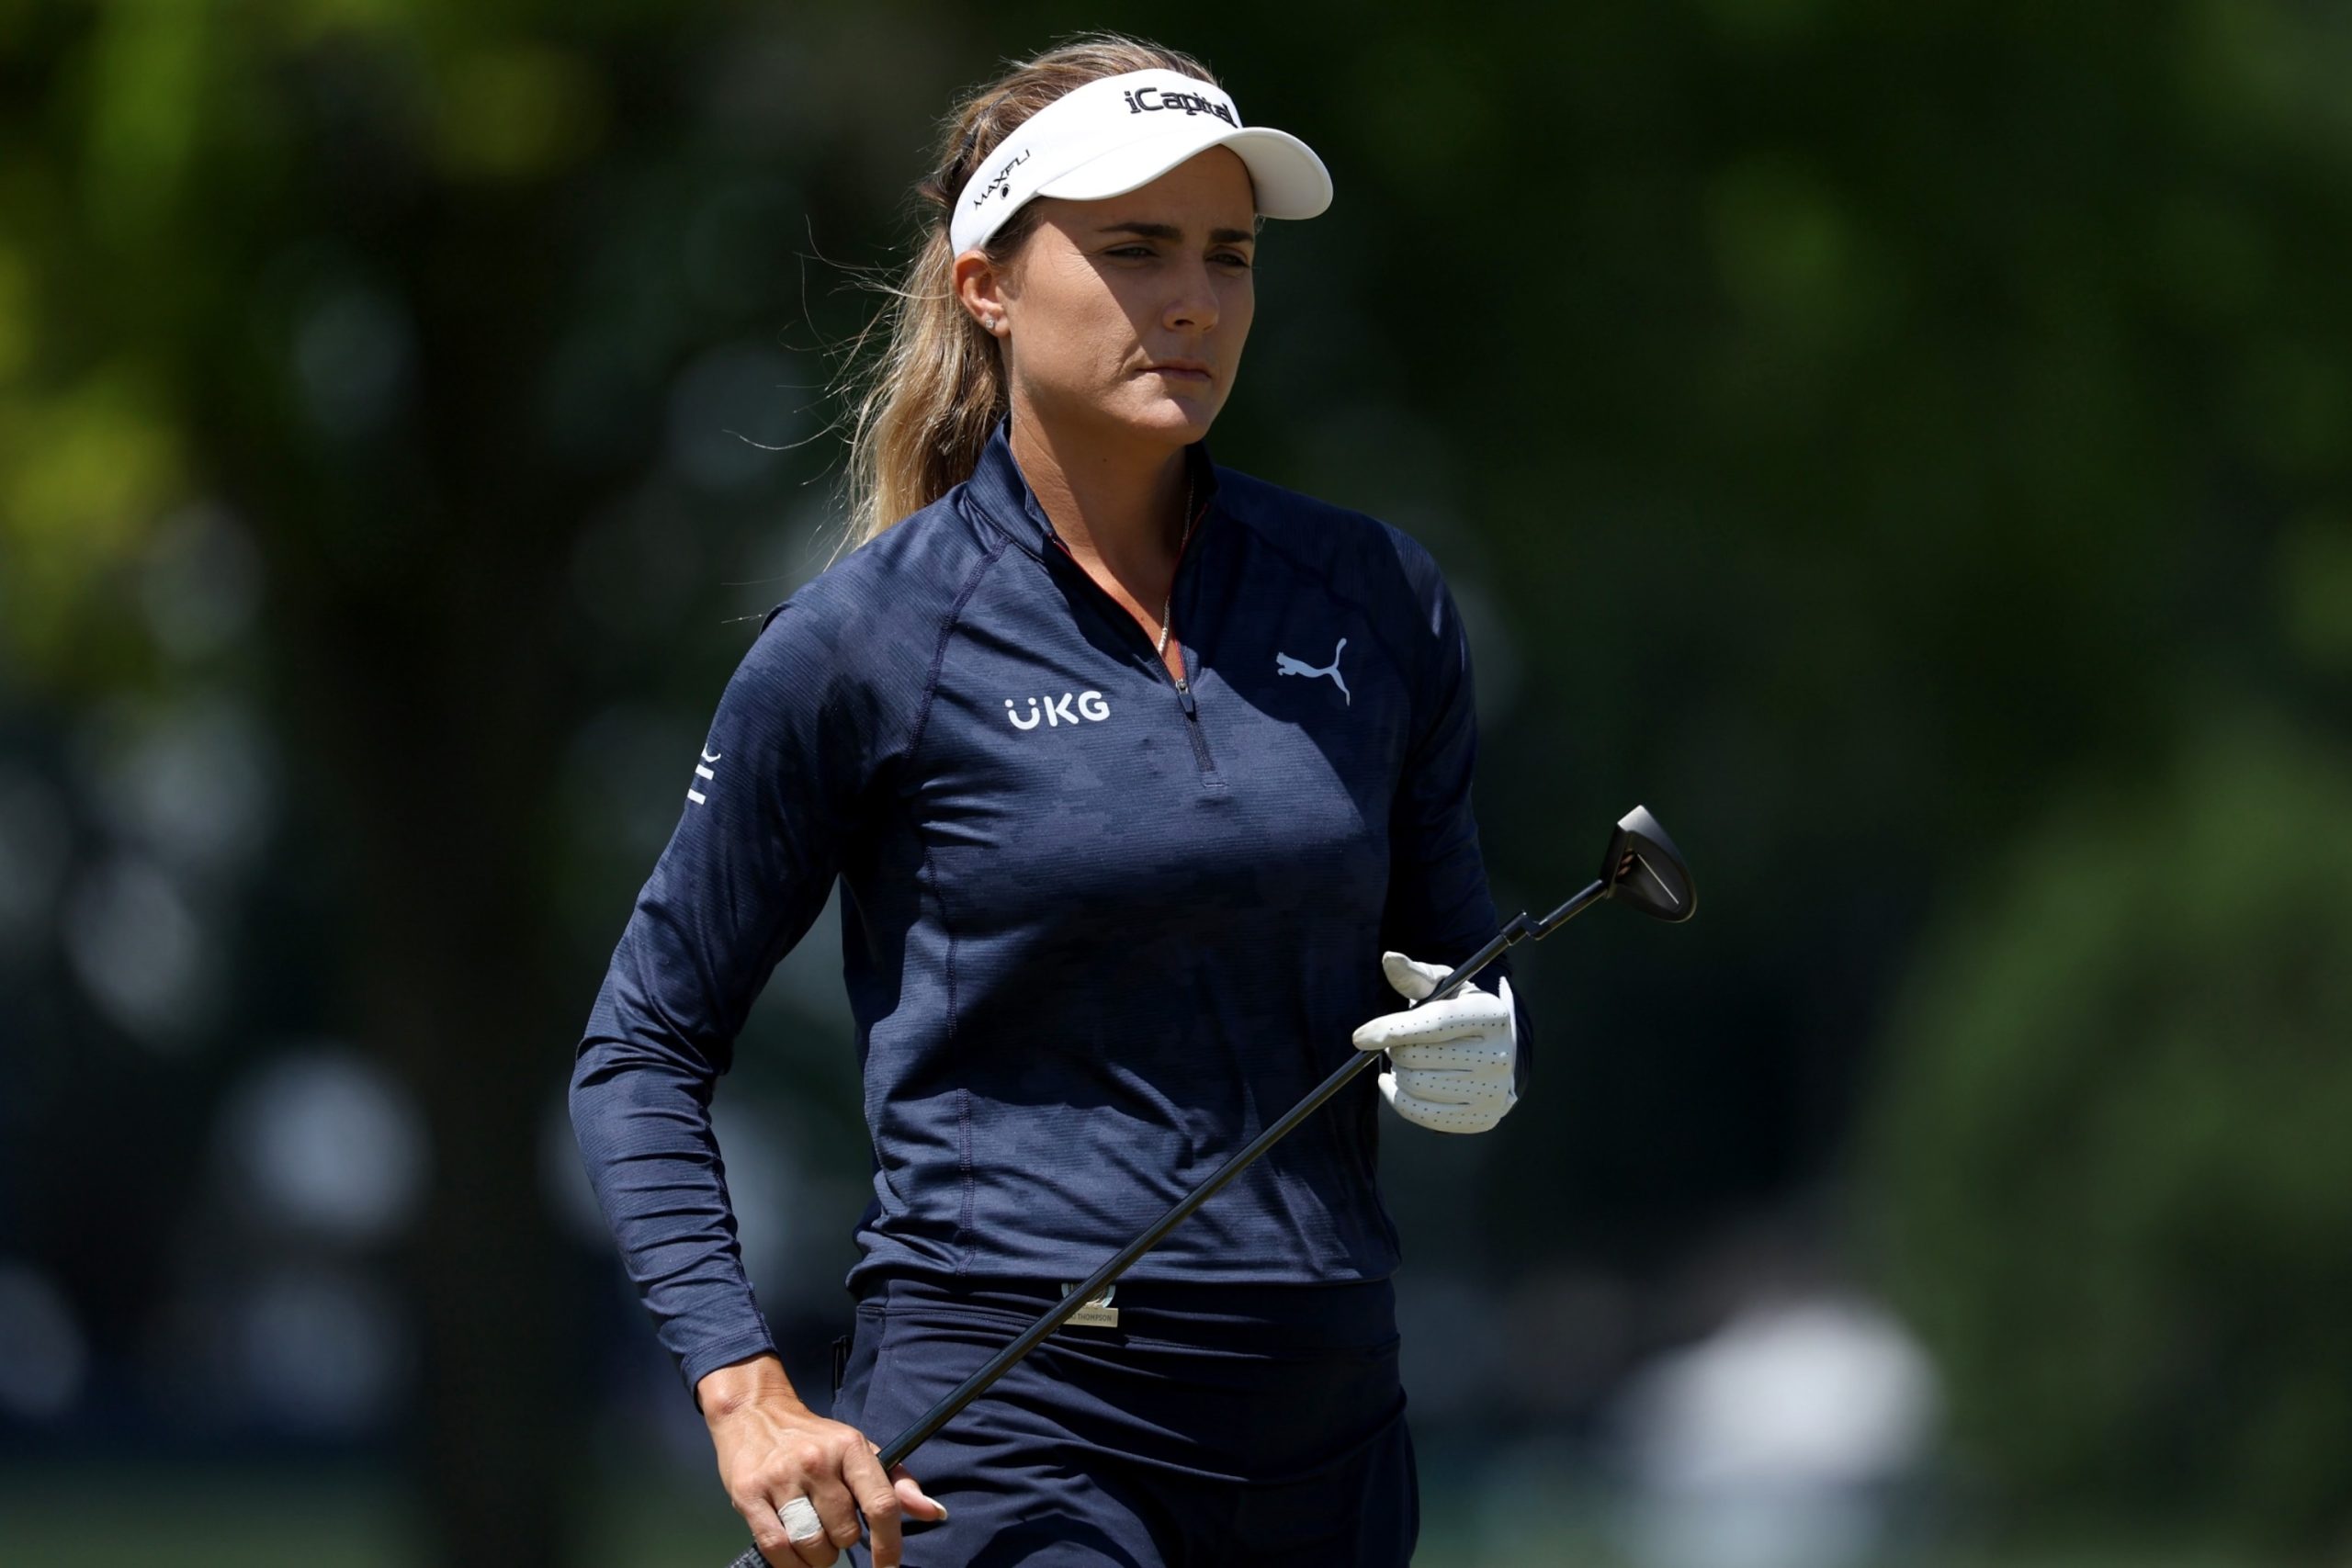 Pro golfer Lexi Thompson announces retirement at age 29 due to mental health challenges